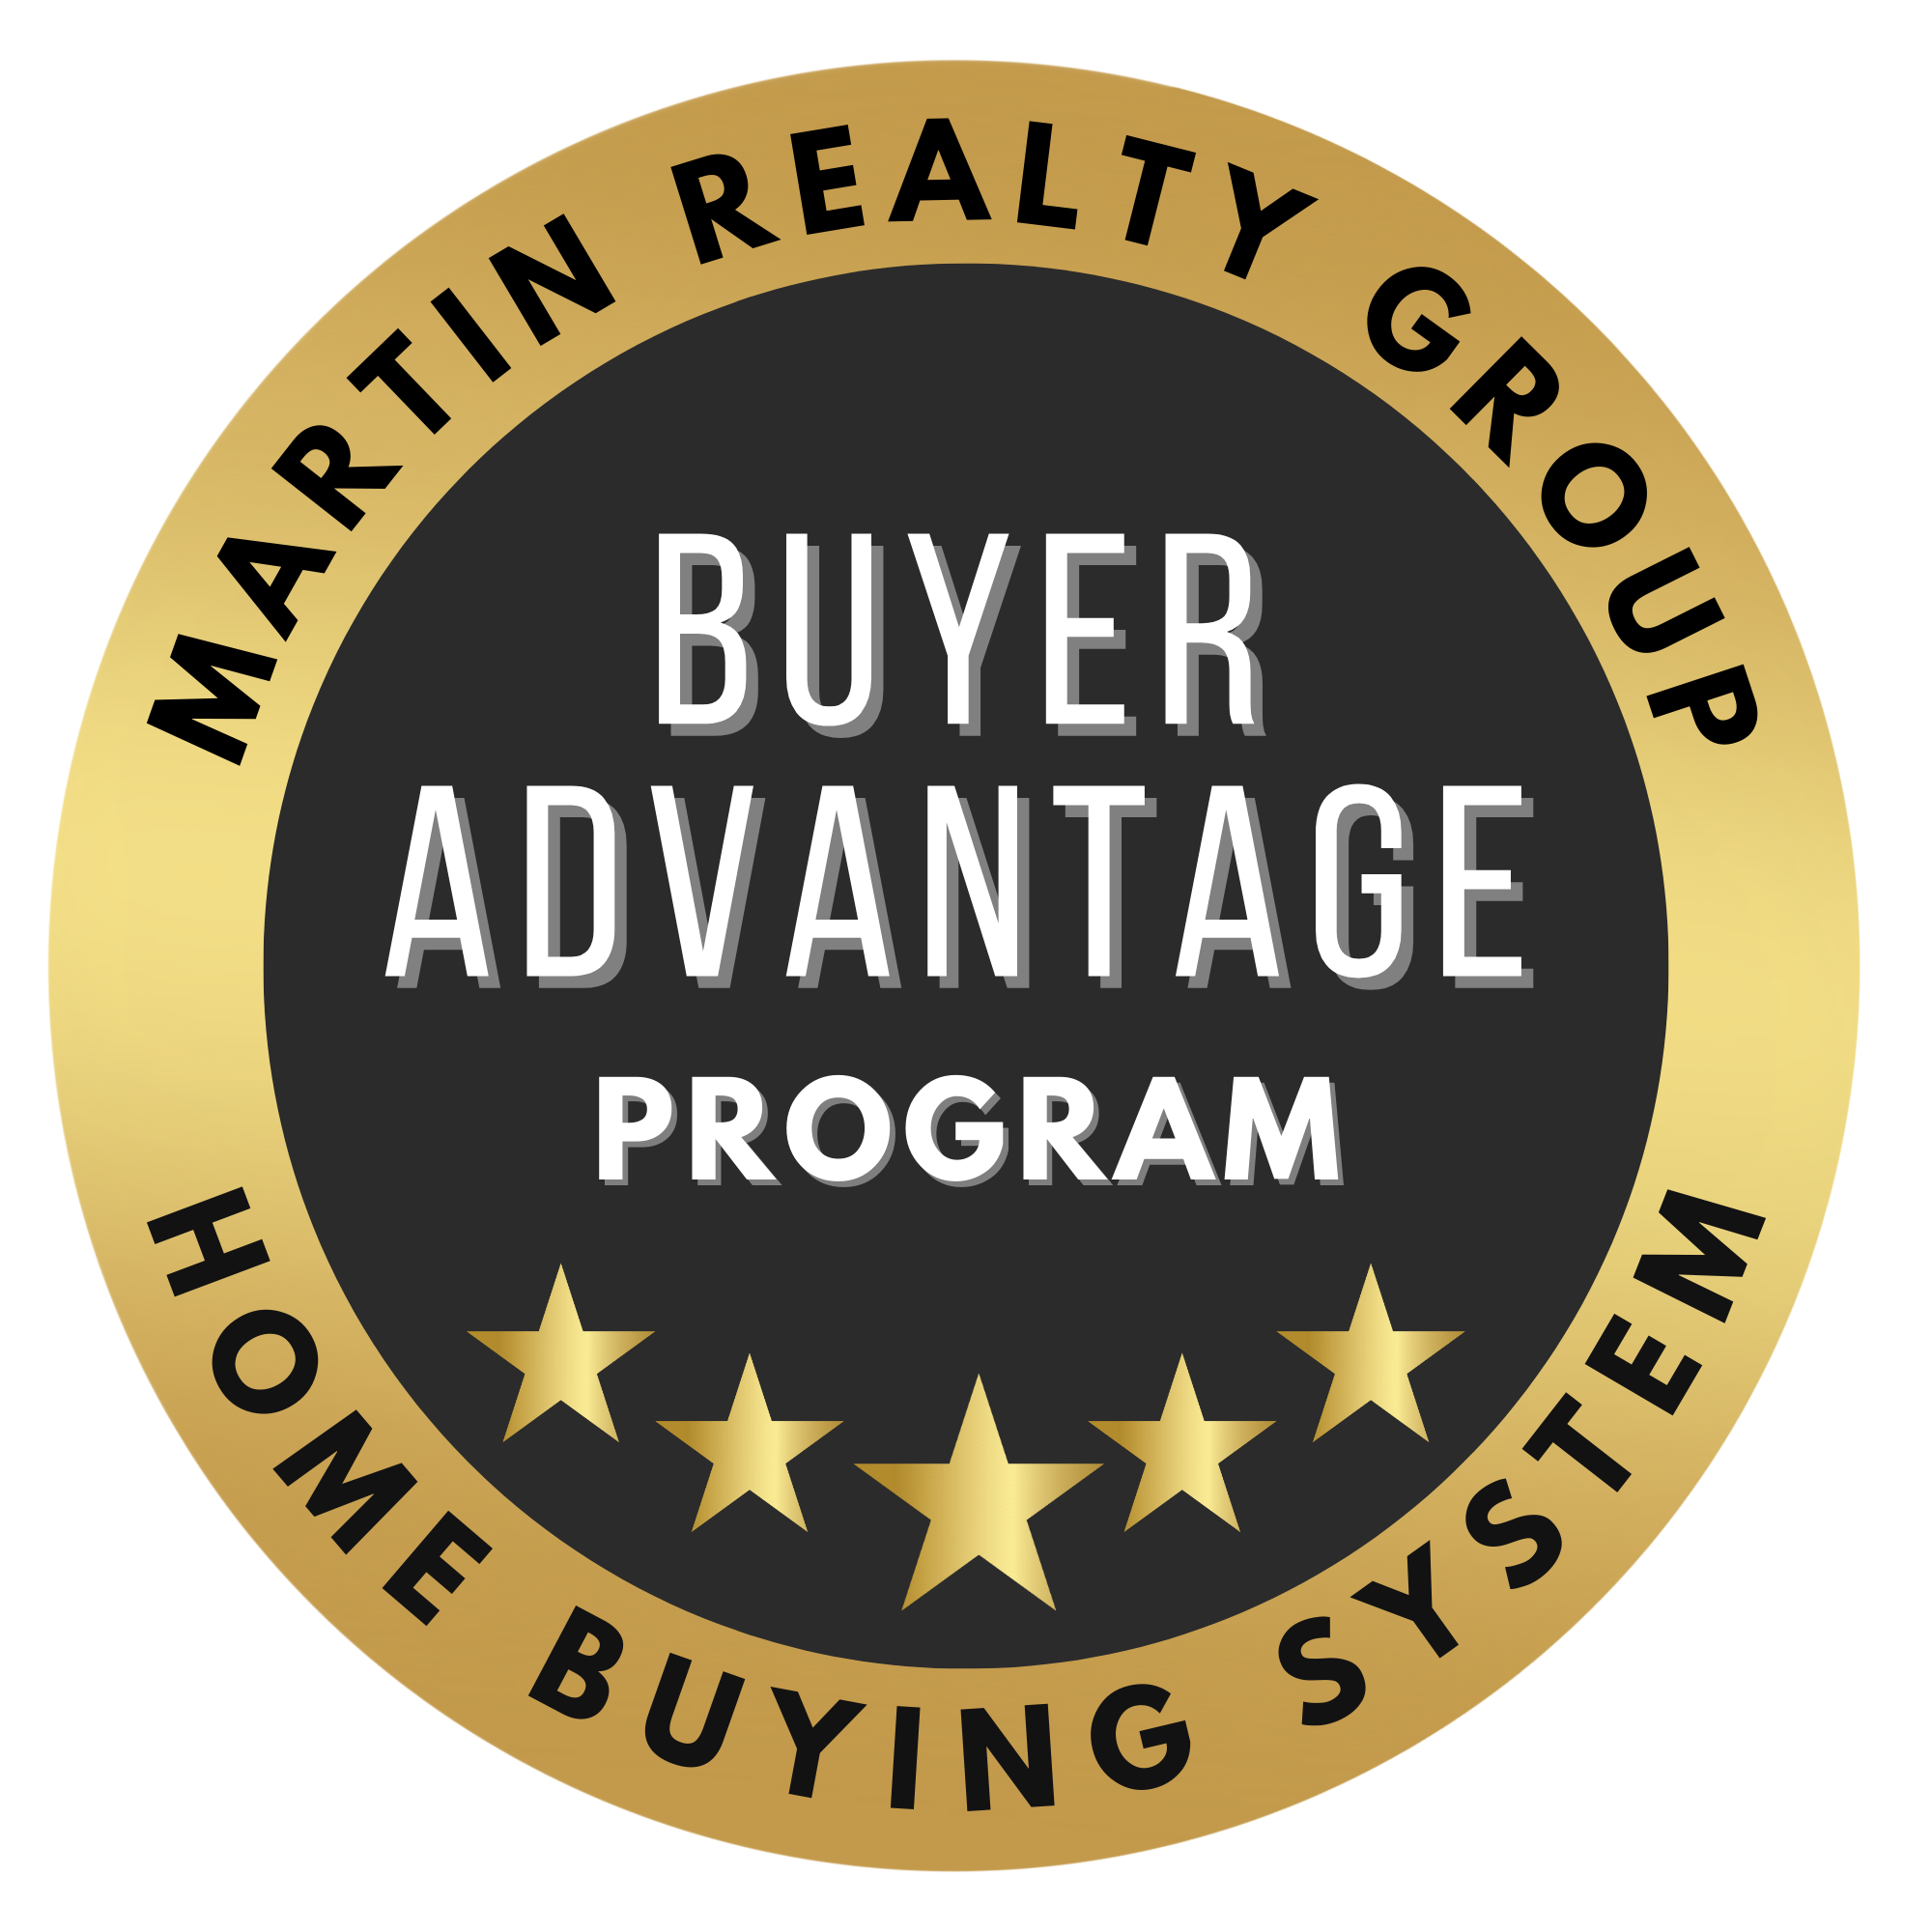 santa clarita home buyer advantage program.png